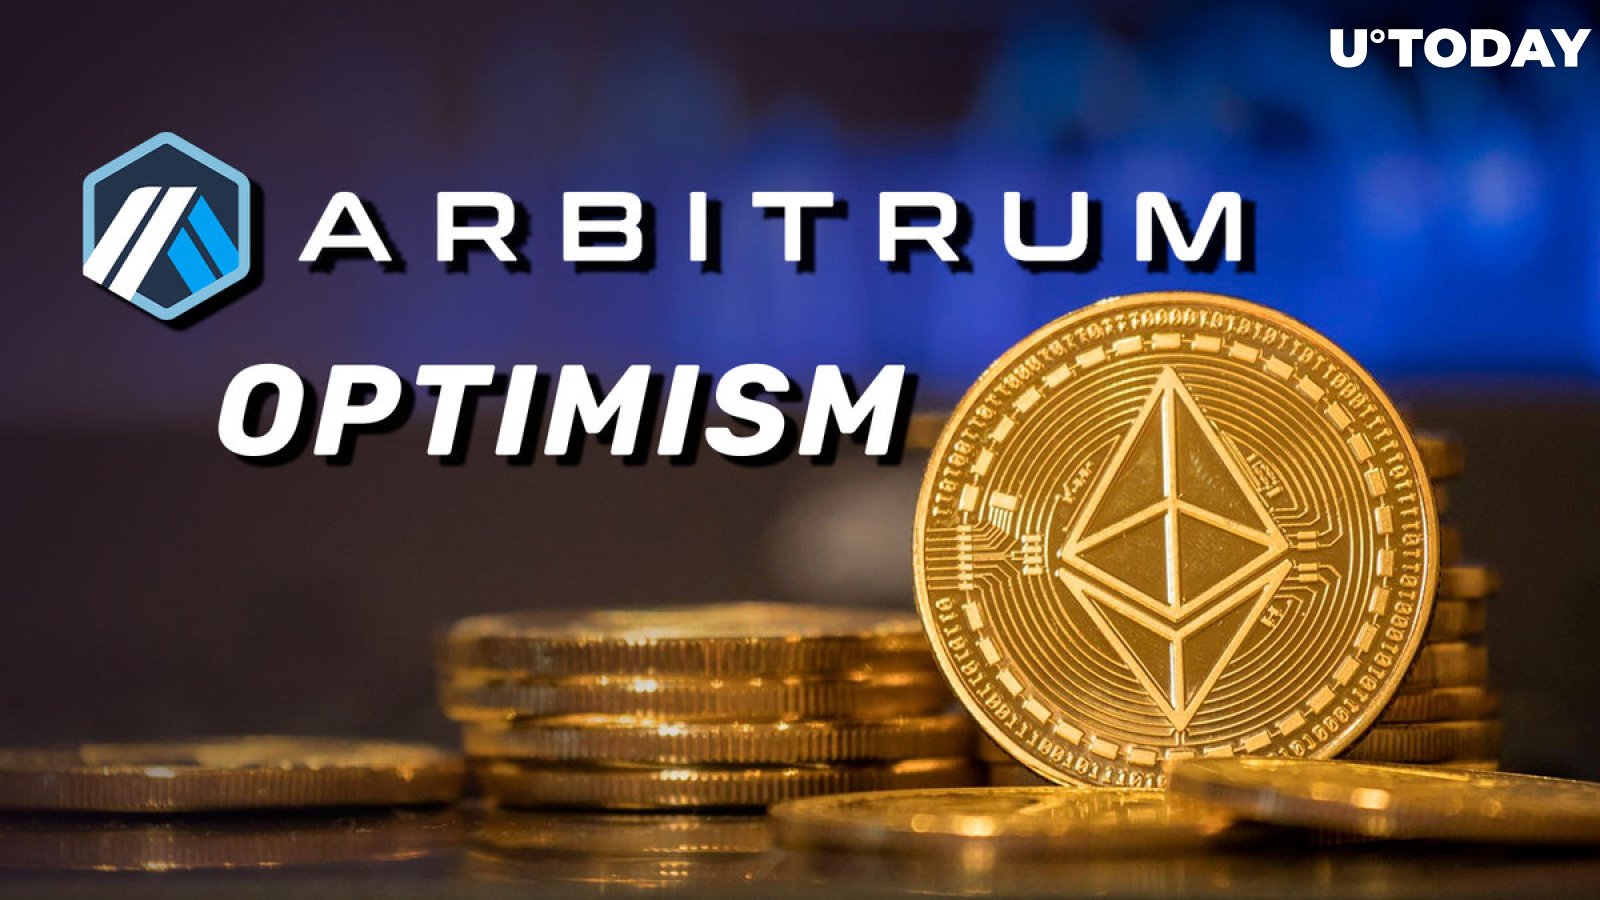 Ethereum (ETH) Hits 400,000 Daily Active Users, Arbitrum, Optimism Follow